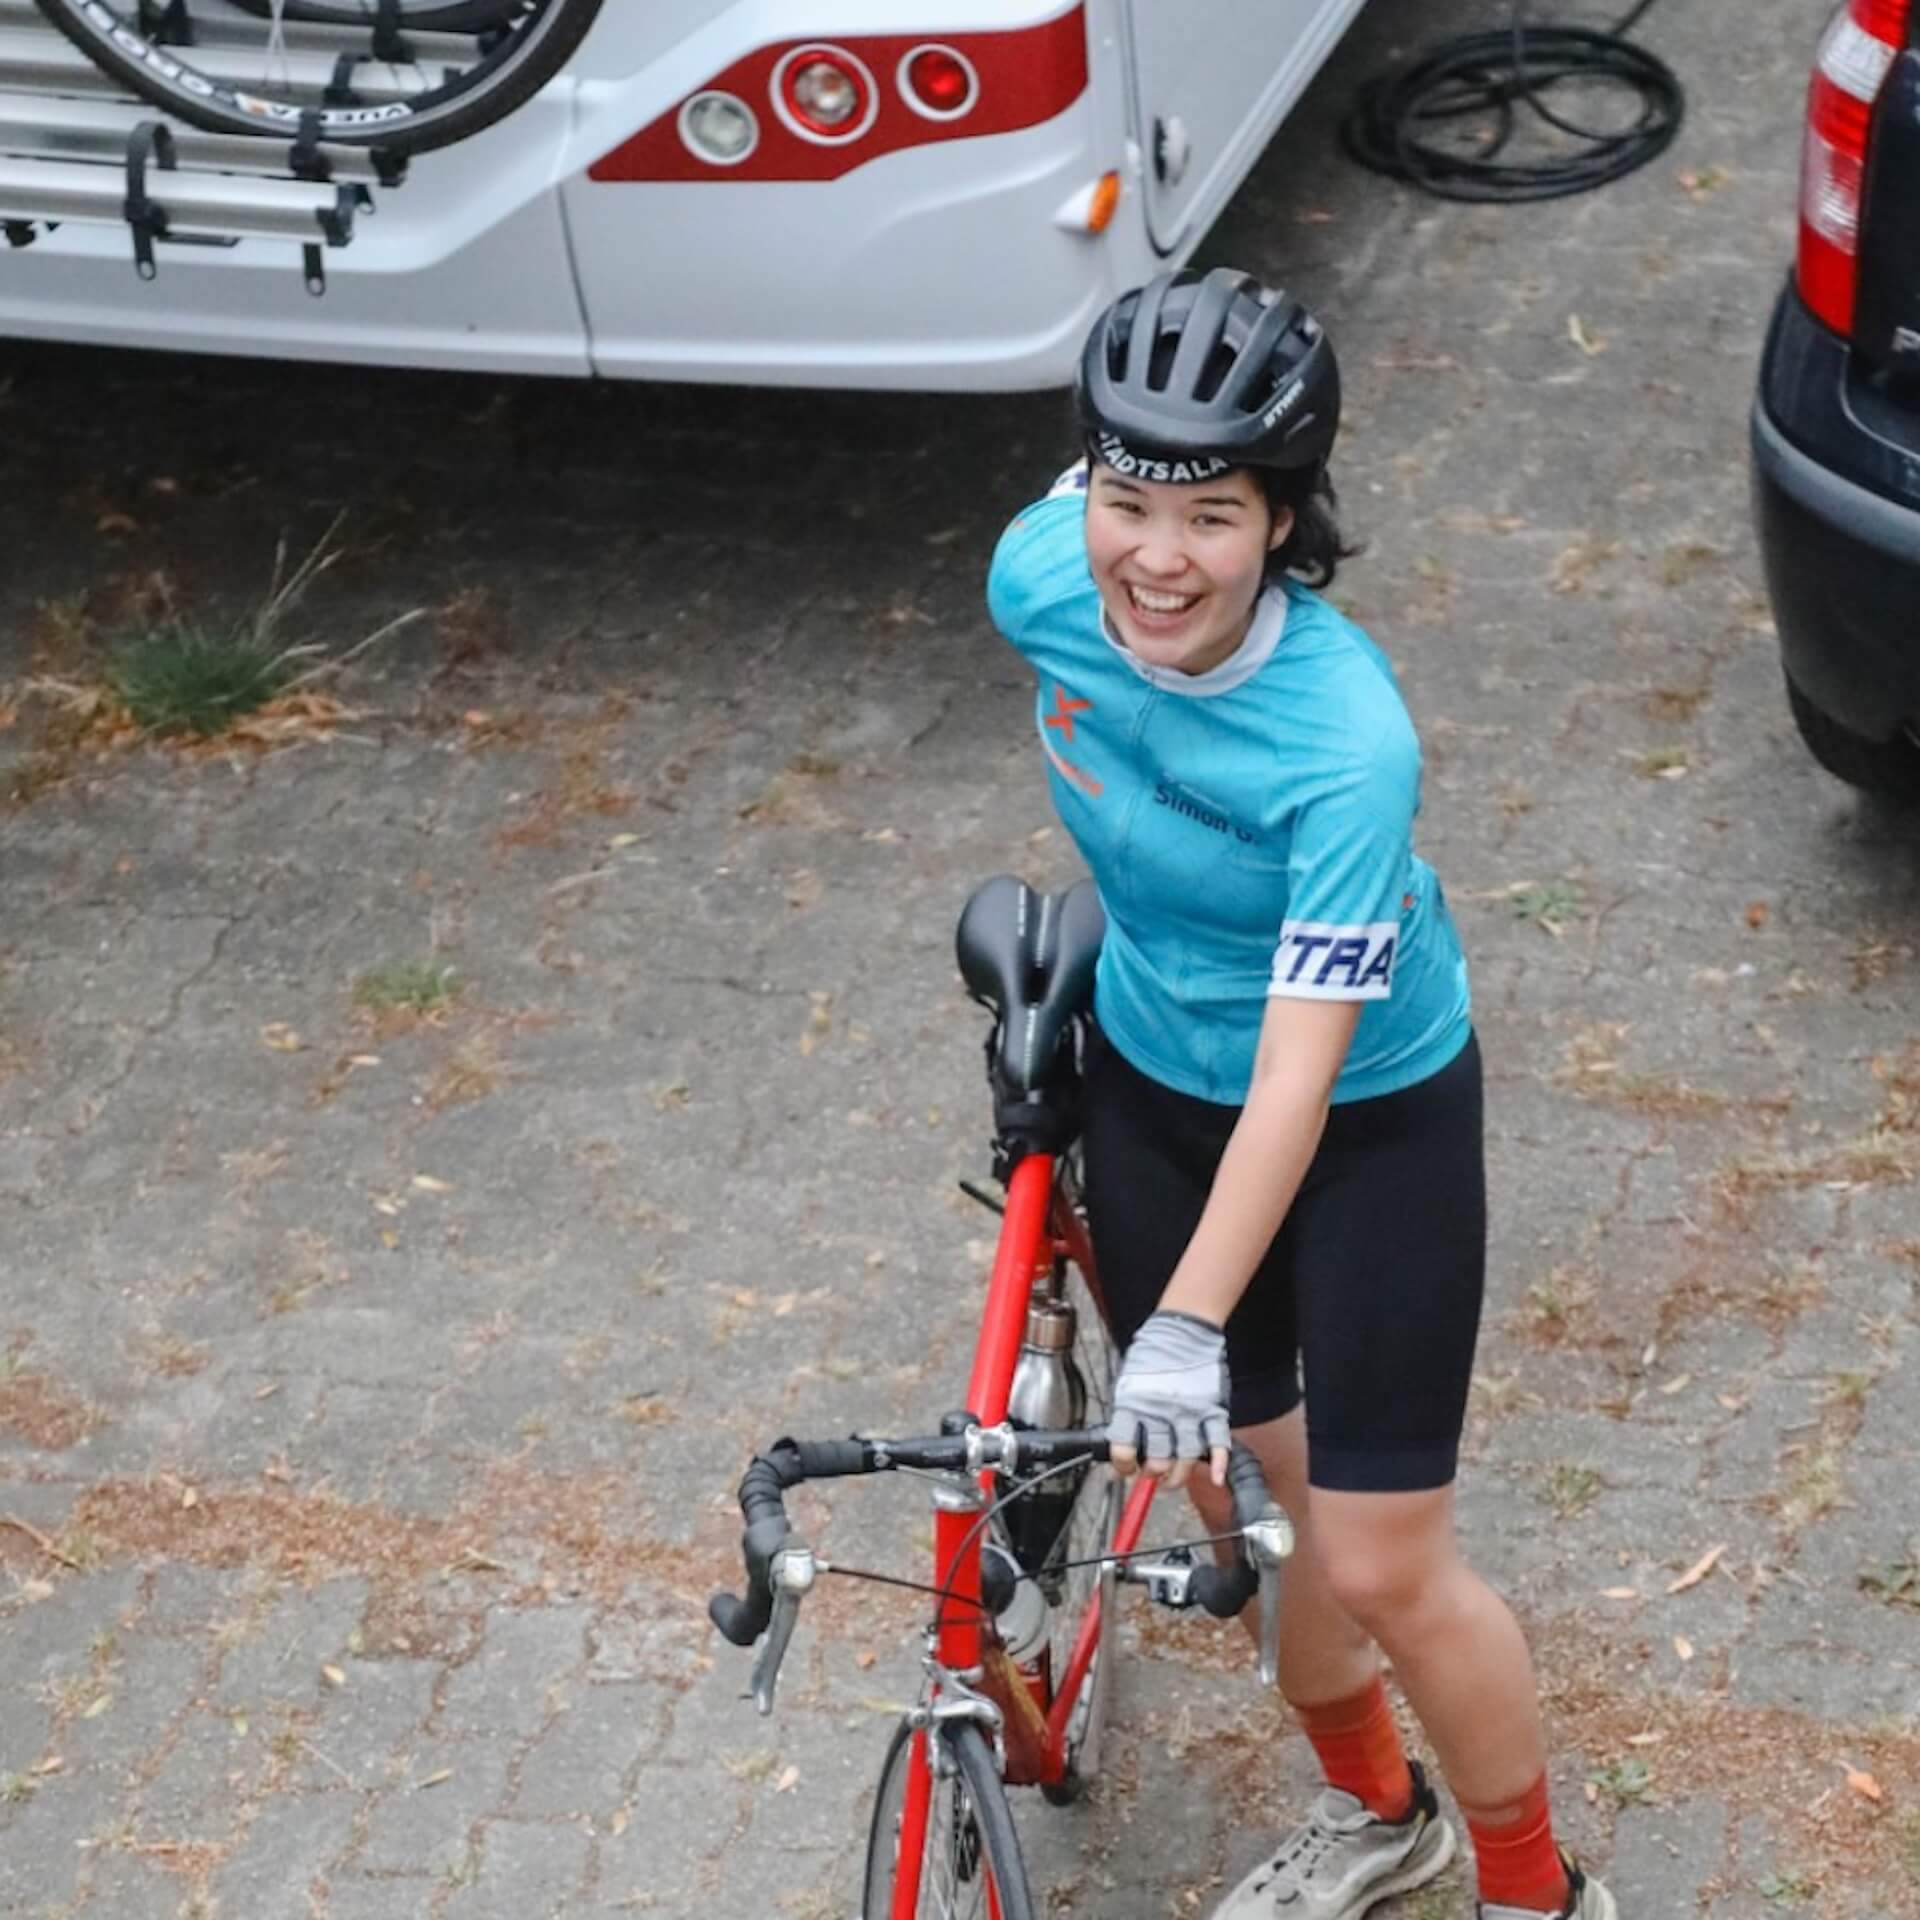 female athlete bike rider smiling